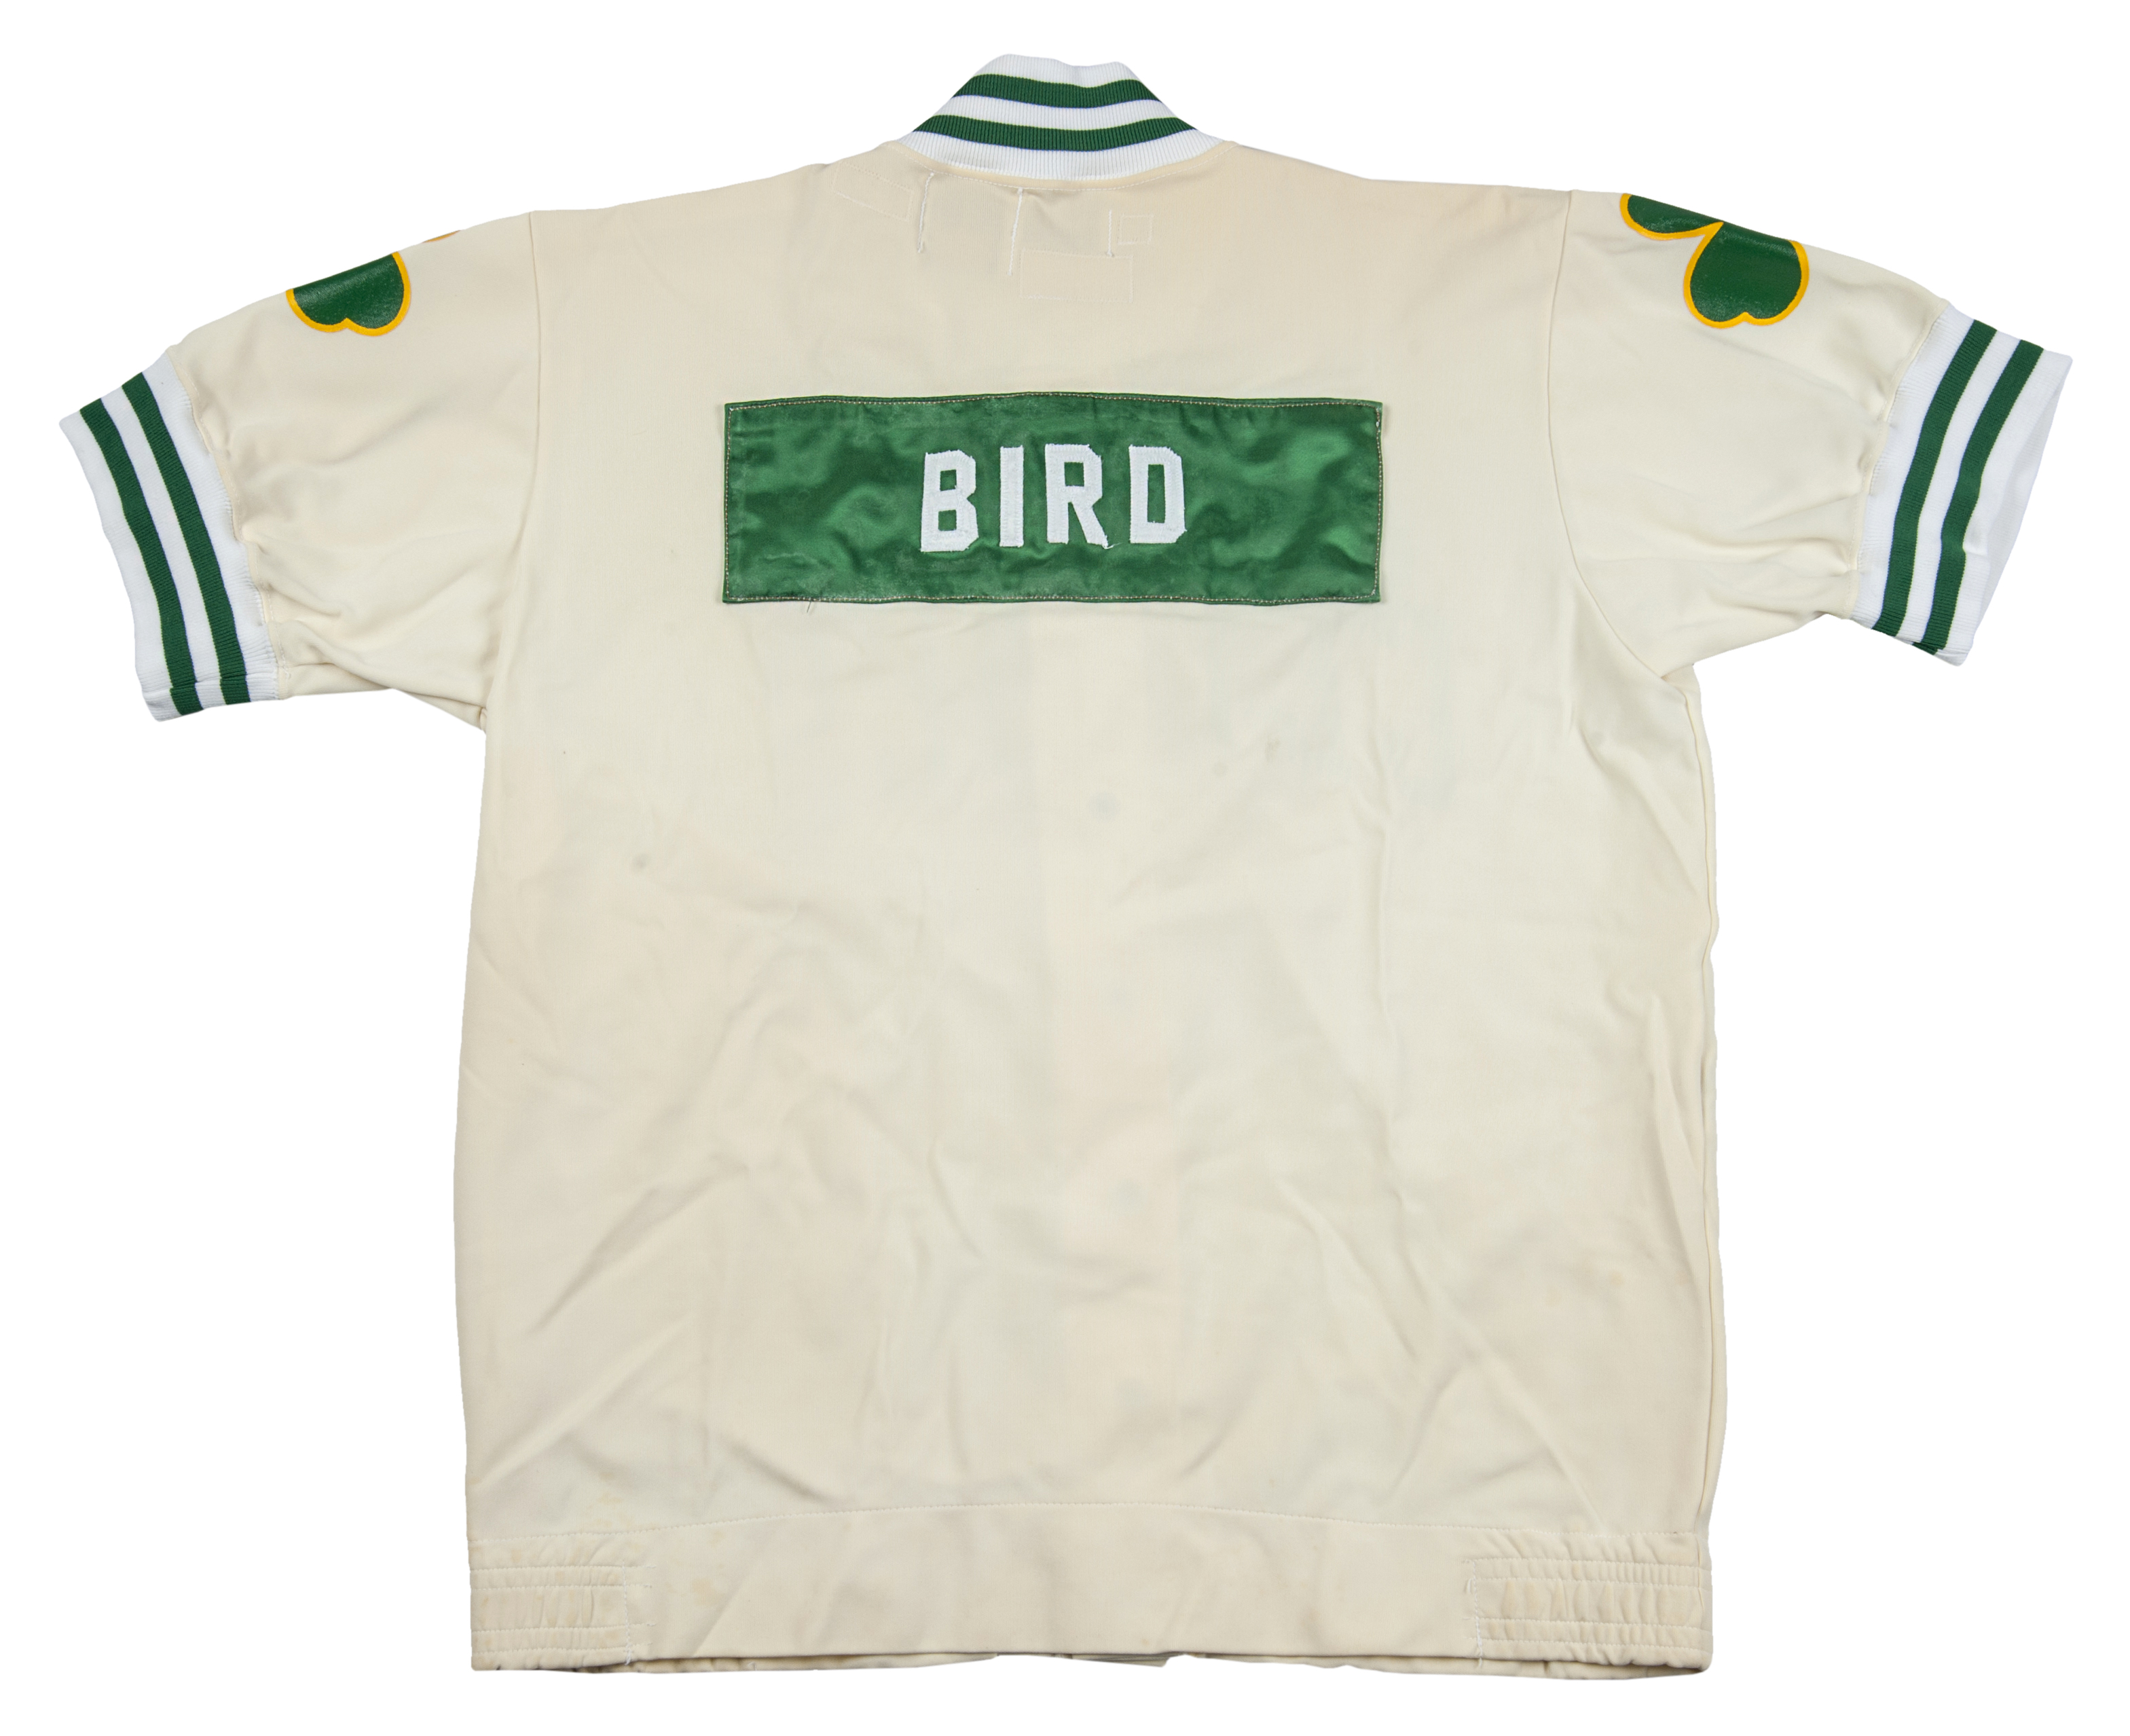 larry bird warm up jersey